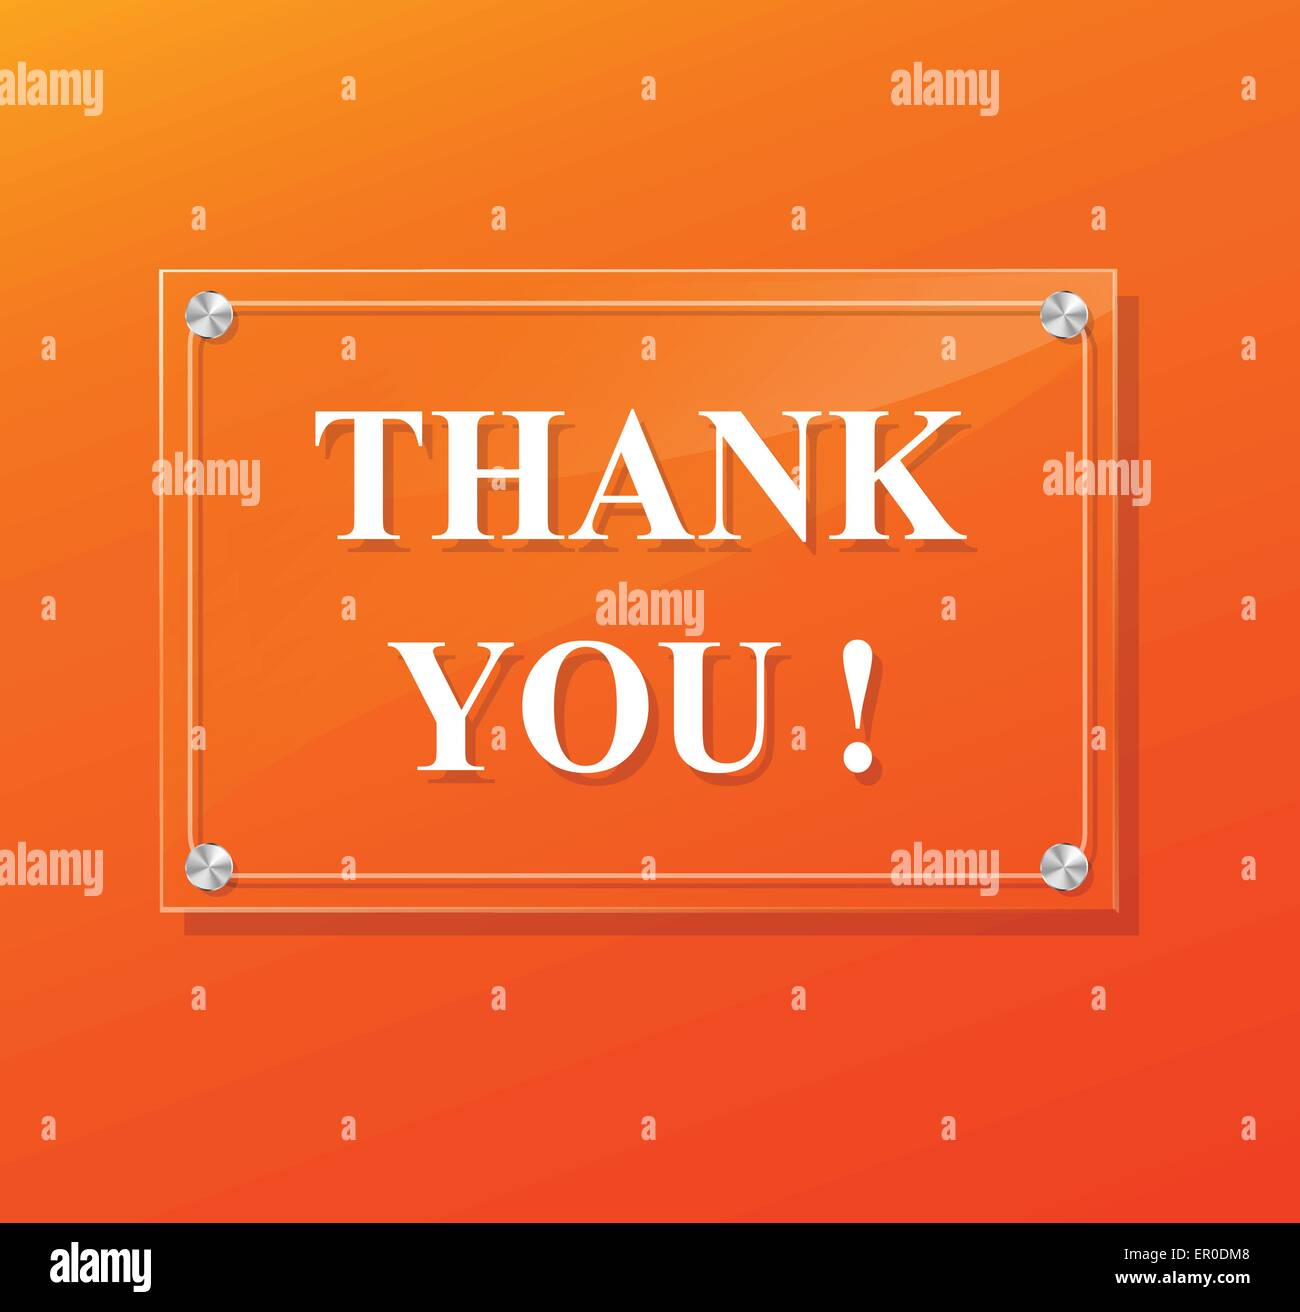 Illustration of orange thank you sign background Stock Vector